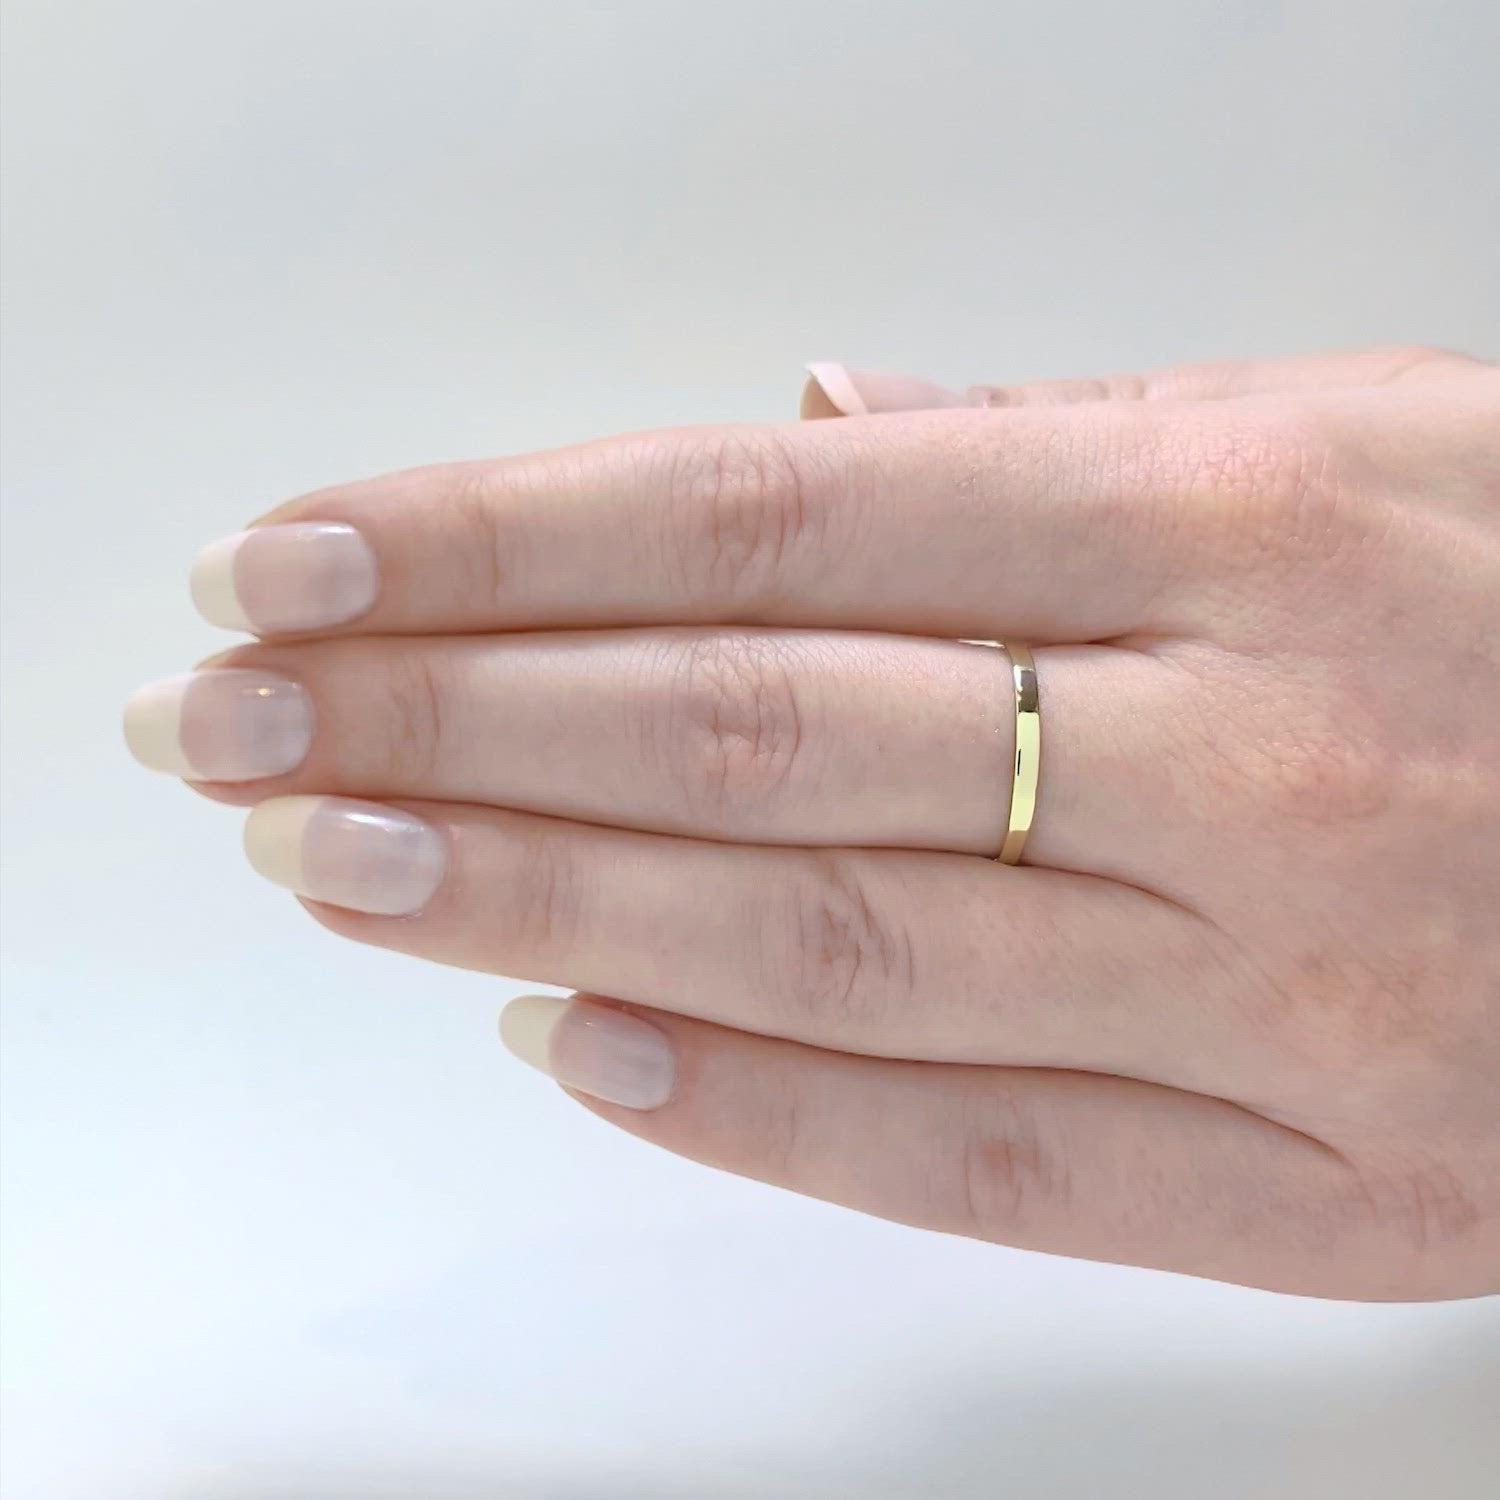 KAT EVE 'Flat Favorite Strong' Ring echtes Gold